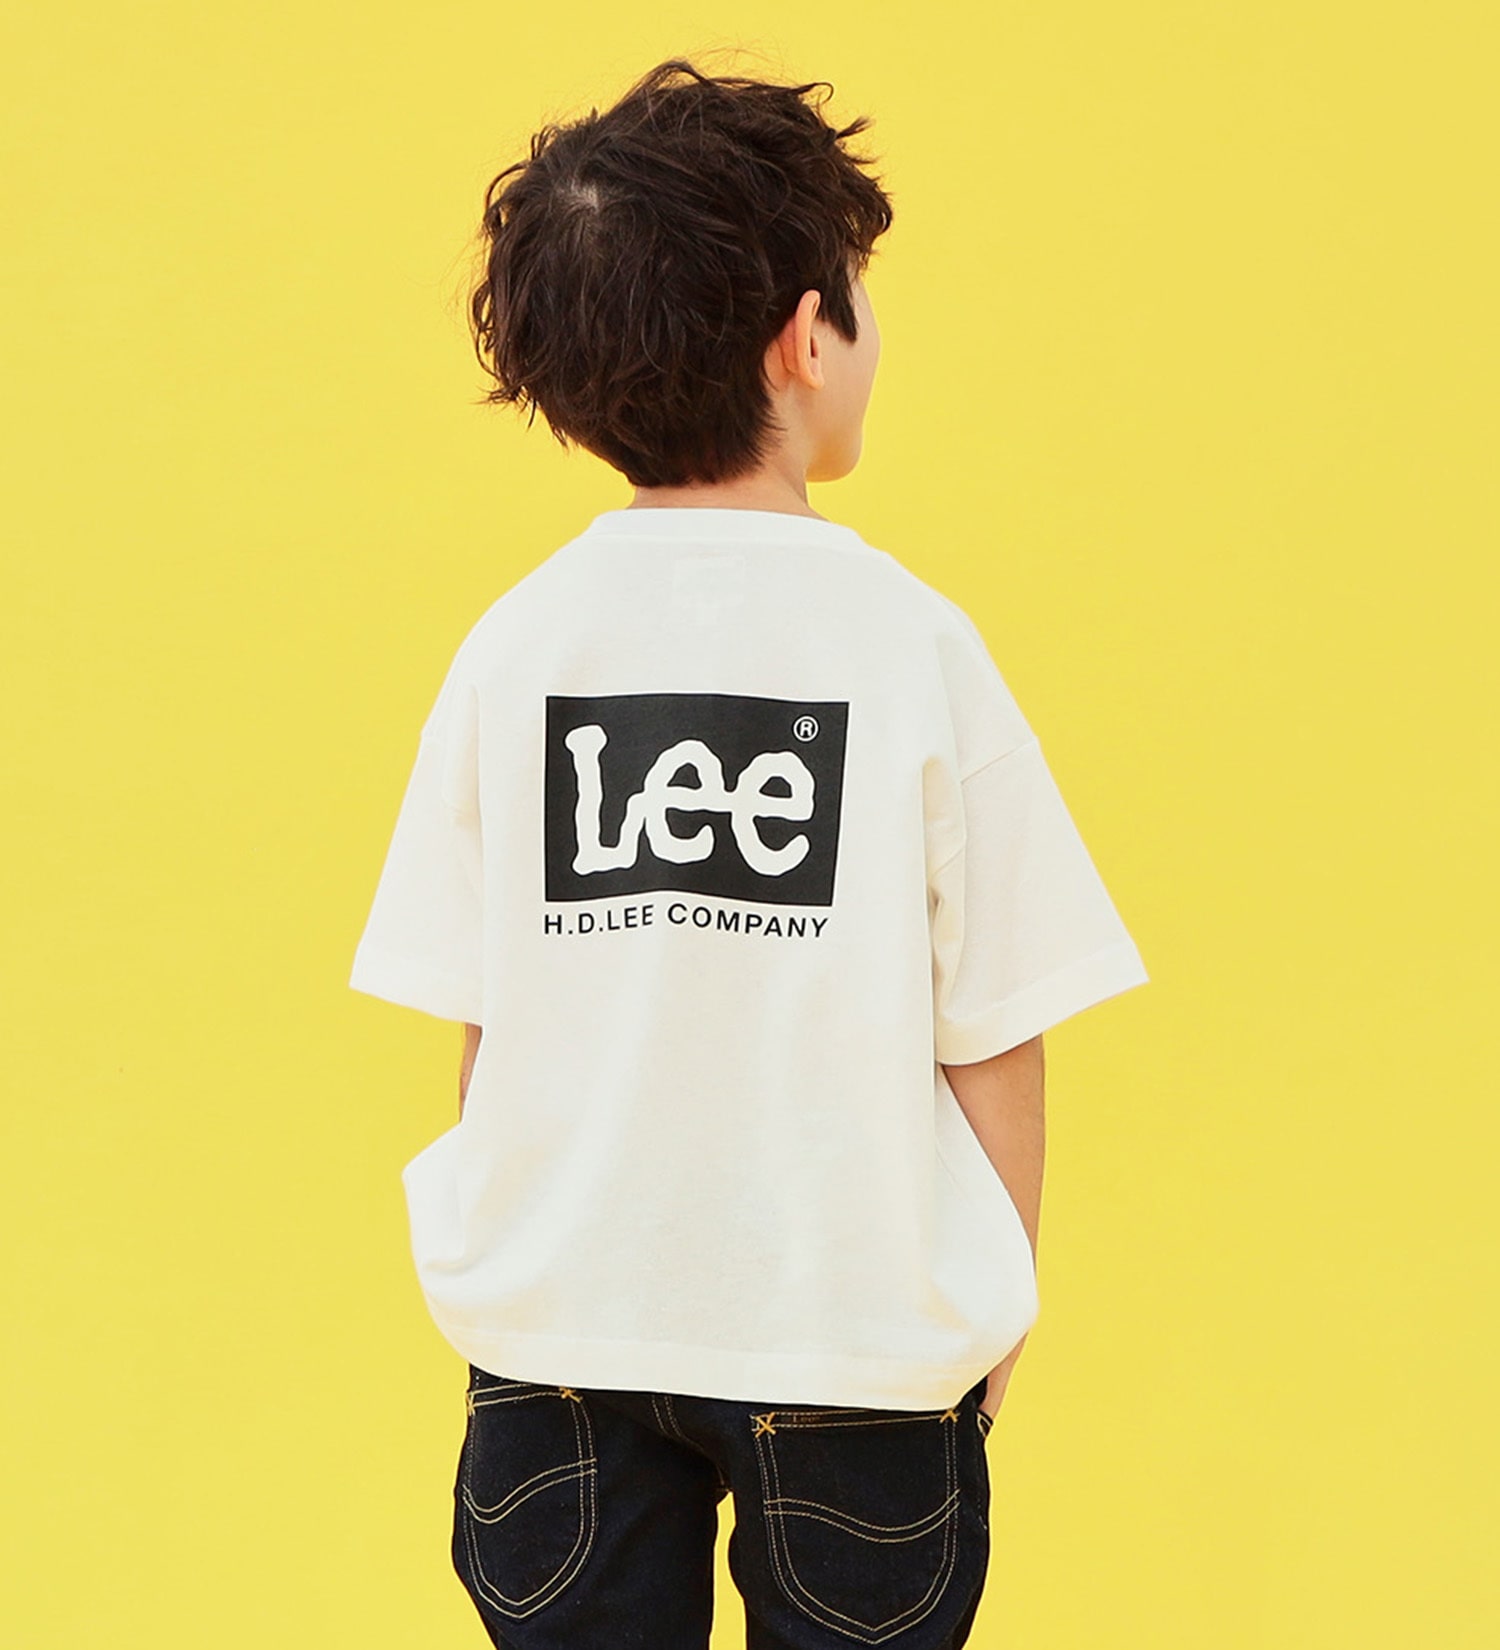 Lee(リー)の【カート割対象】【FINAL SALE】【110-150cm】キッズ バックロゴプリント半袖Tシャツ|トップス/Tシャツ/カットソー/キッズ|ホワイト